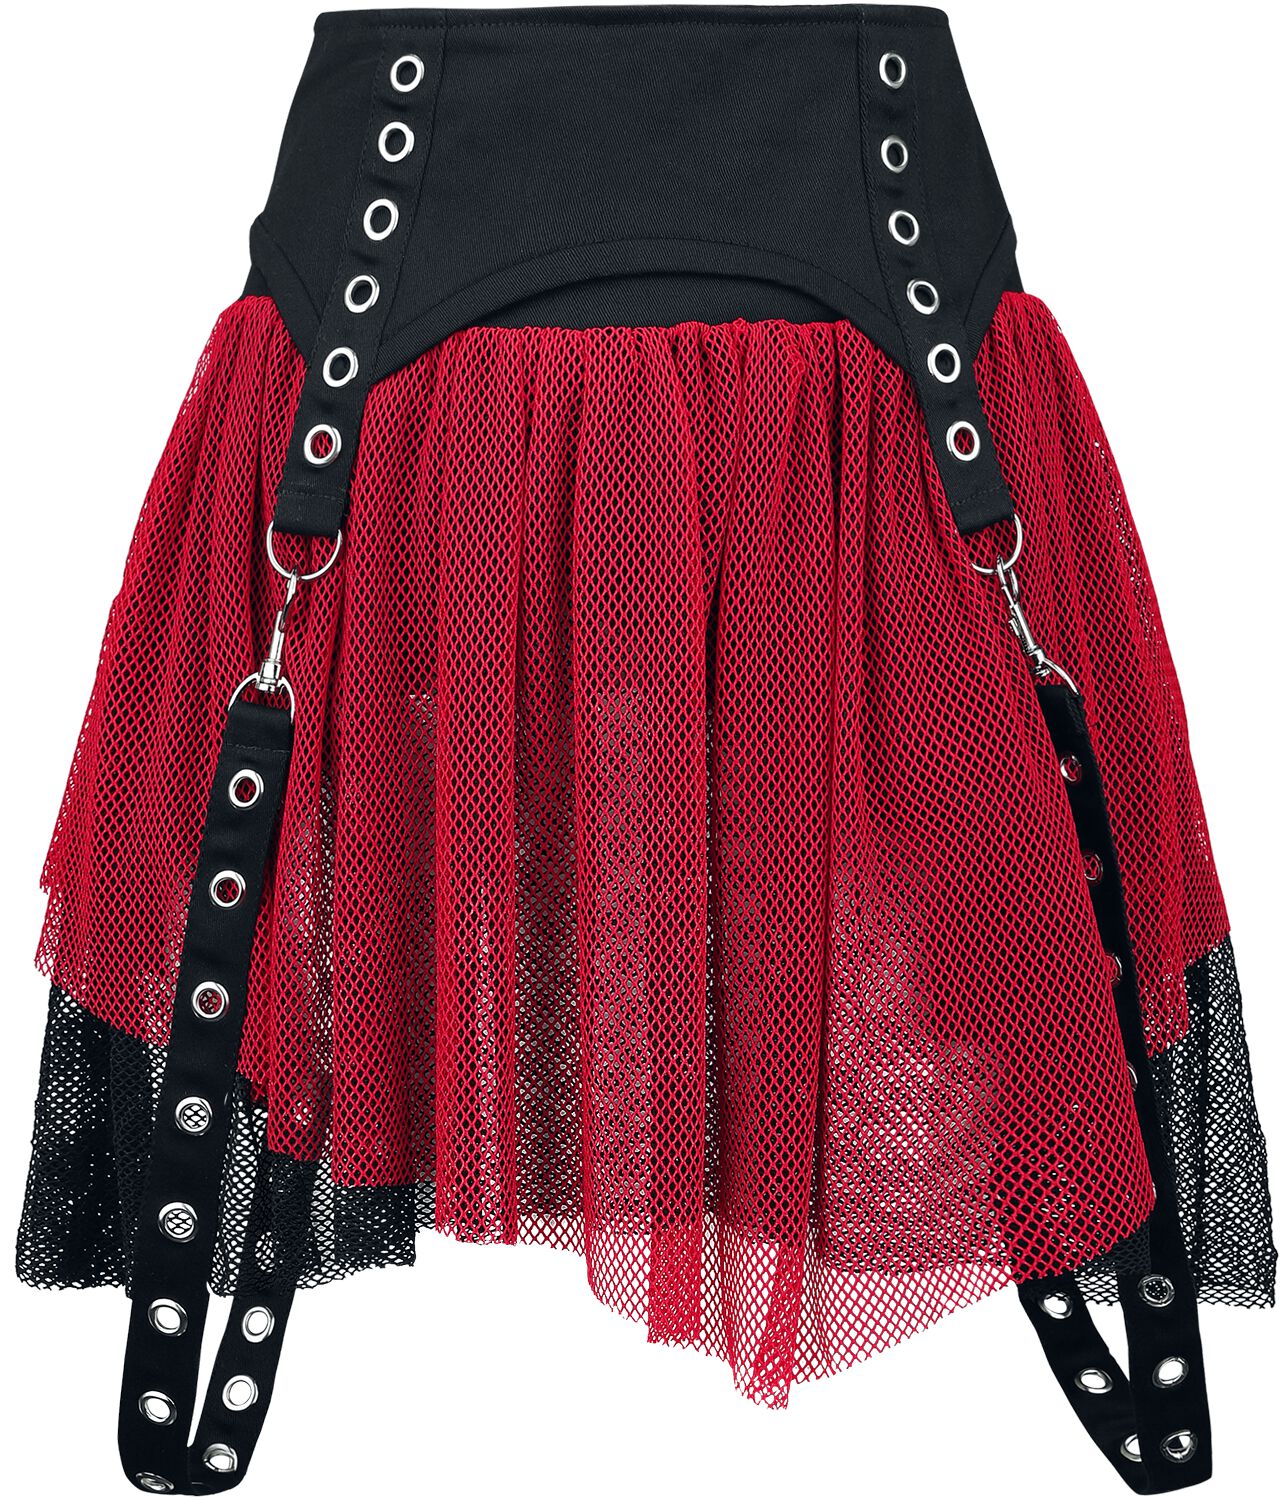 Image of Minigonna Gothic di Poizen Industries - Cybele skirt - XS a XL - Donna - nero/rosso